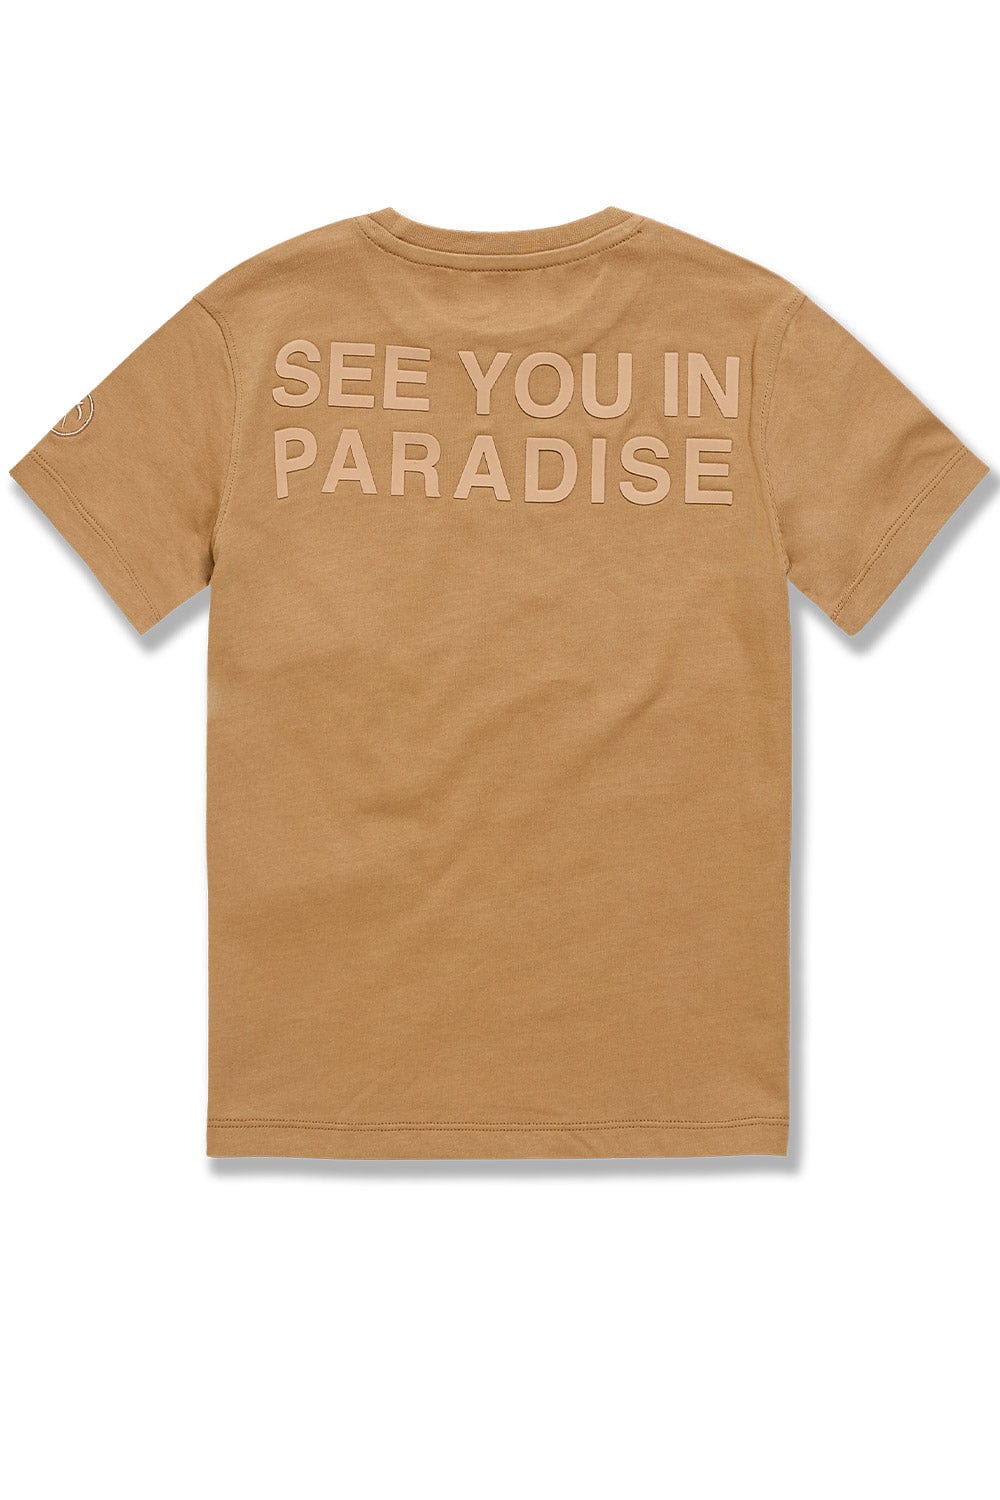 JC Kids Kids Paradise Tonal T-Shirt (Mocha)